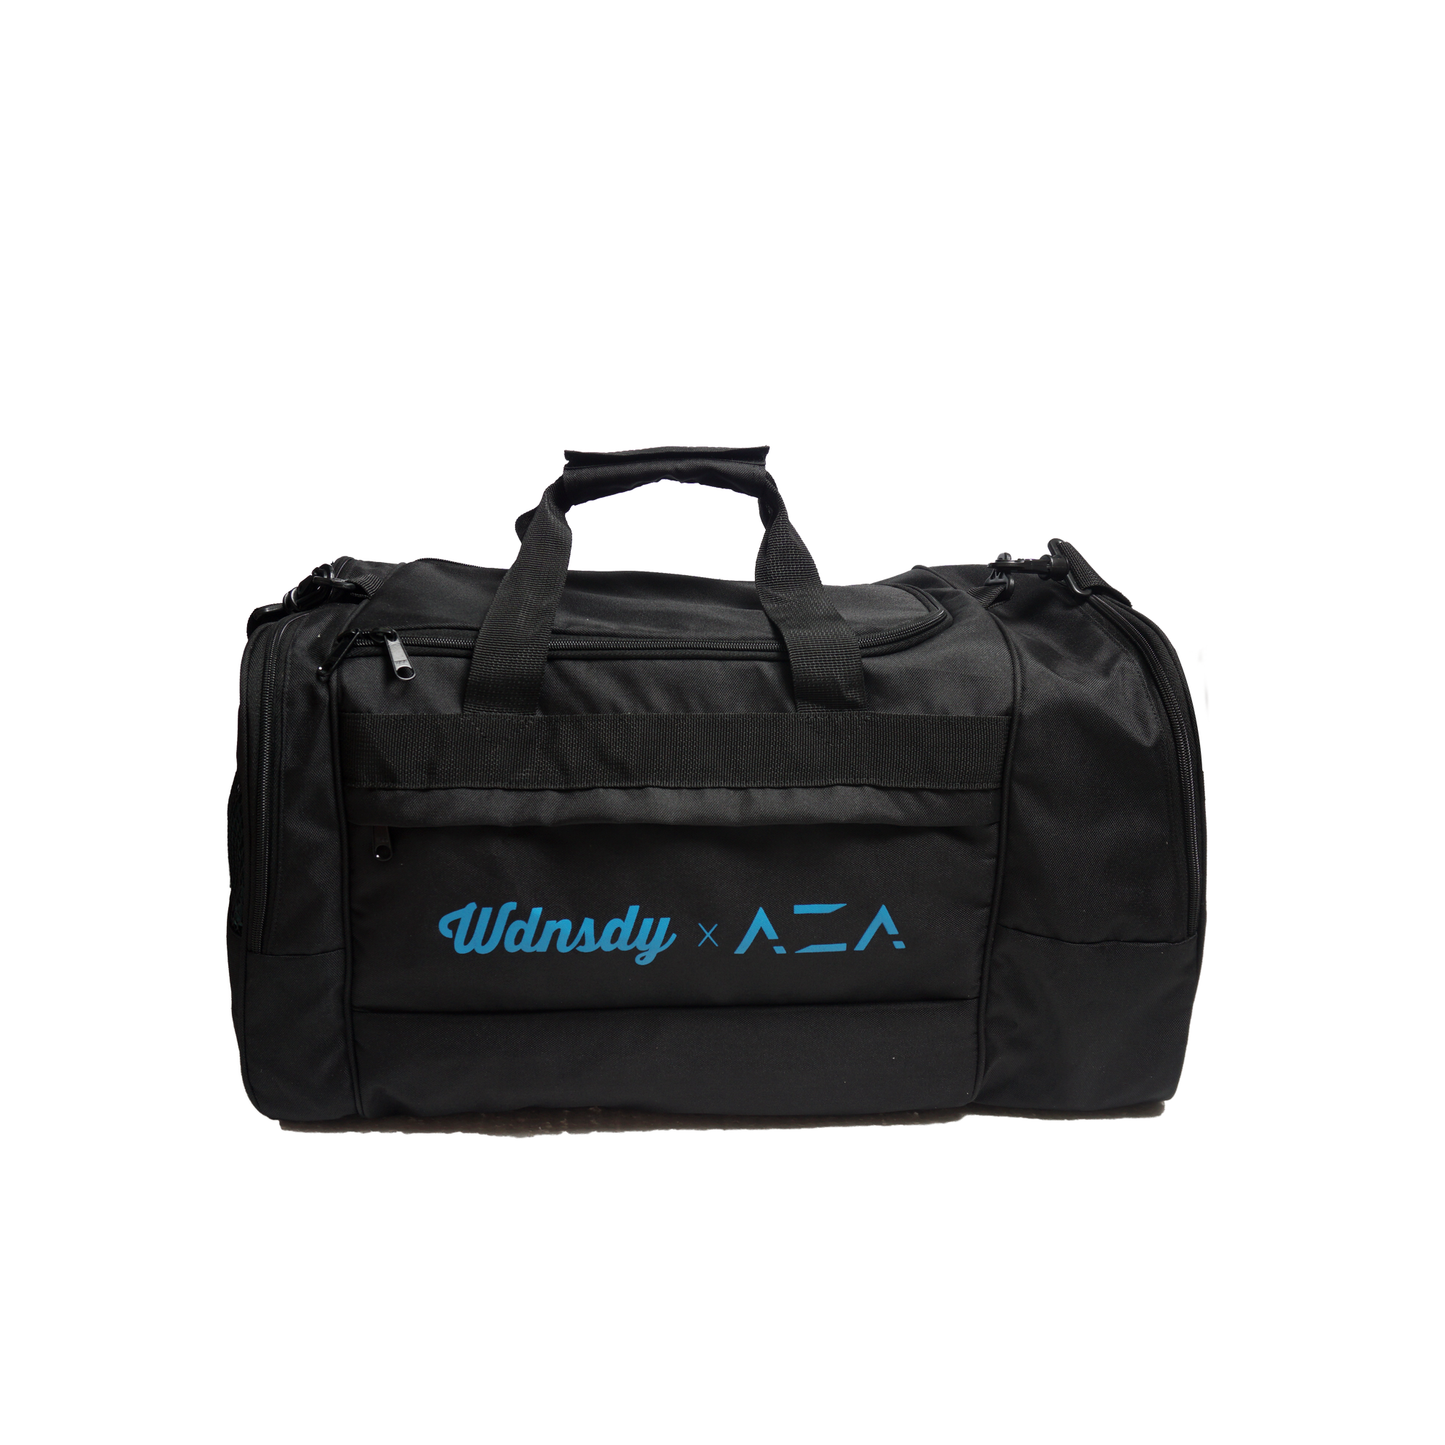 AZA x Wdnsdy Premium Cycling Gym Bag